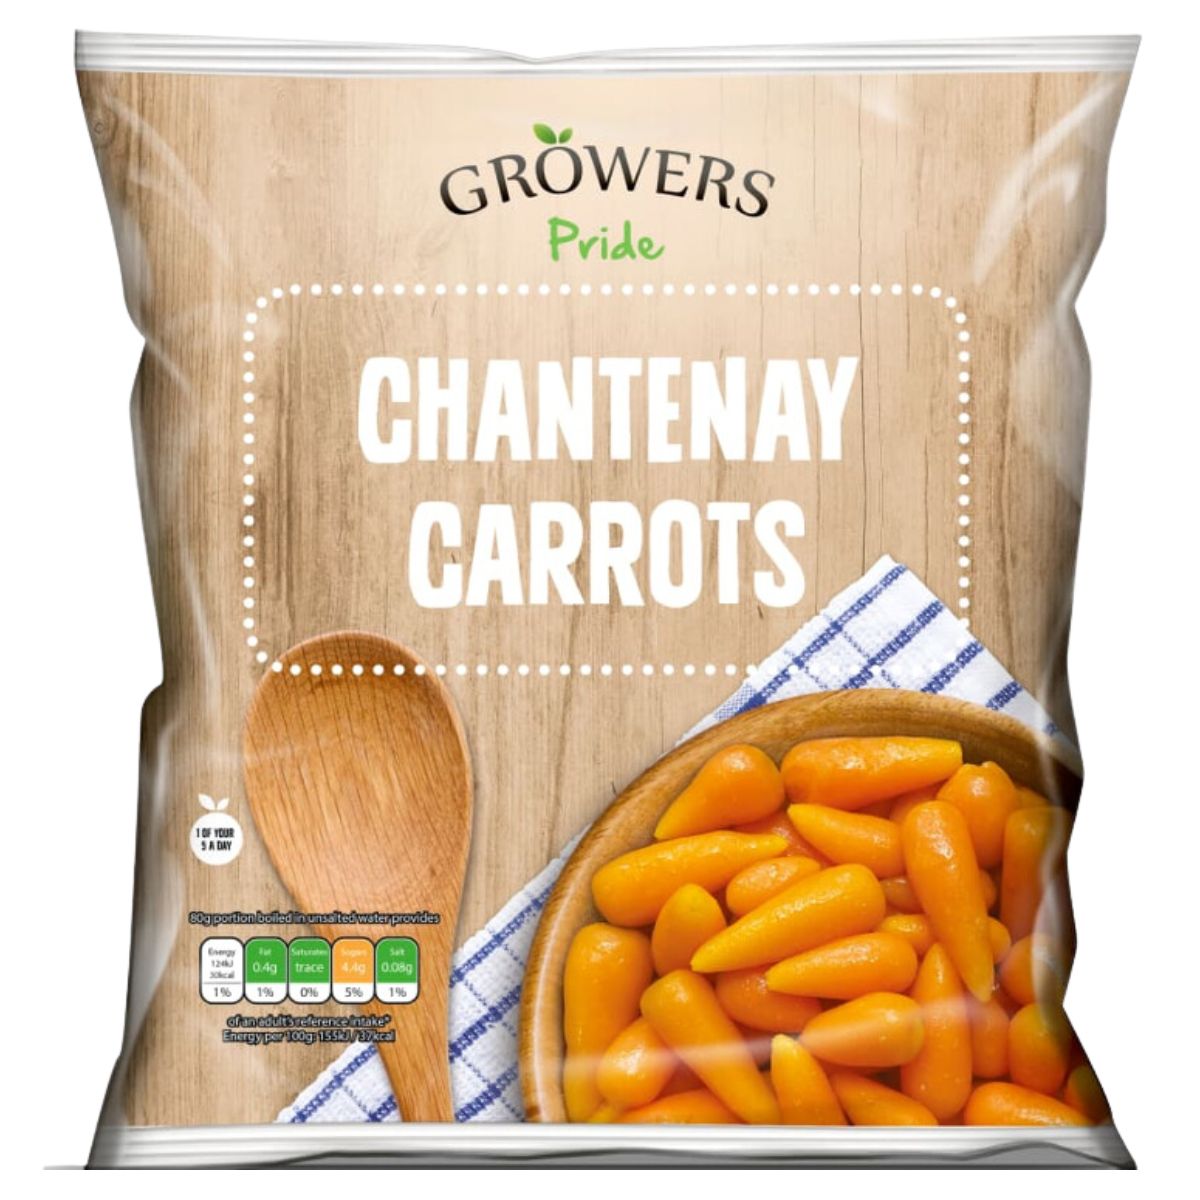 Growers Pride - Chantenay Carrots - 450g pure chantanay carrots.